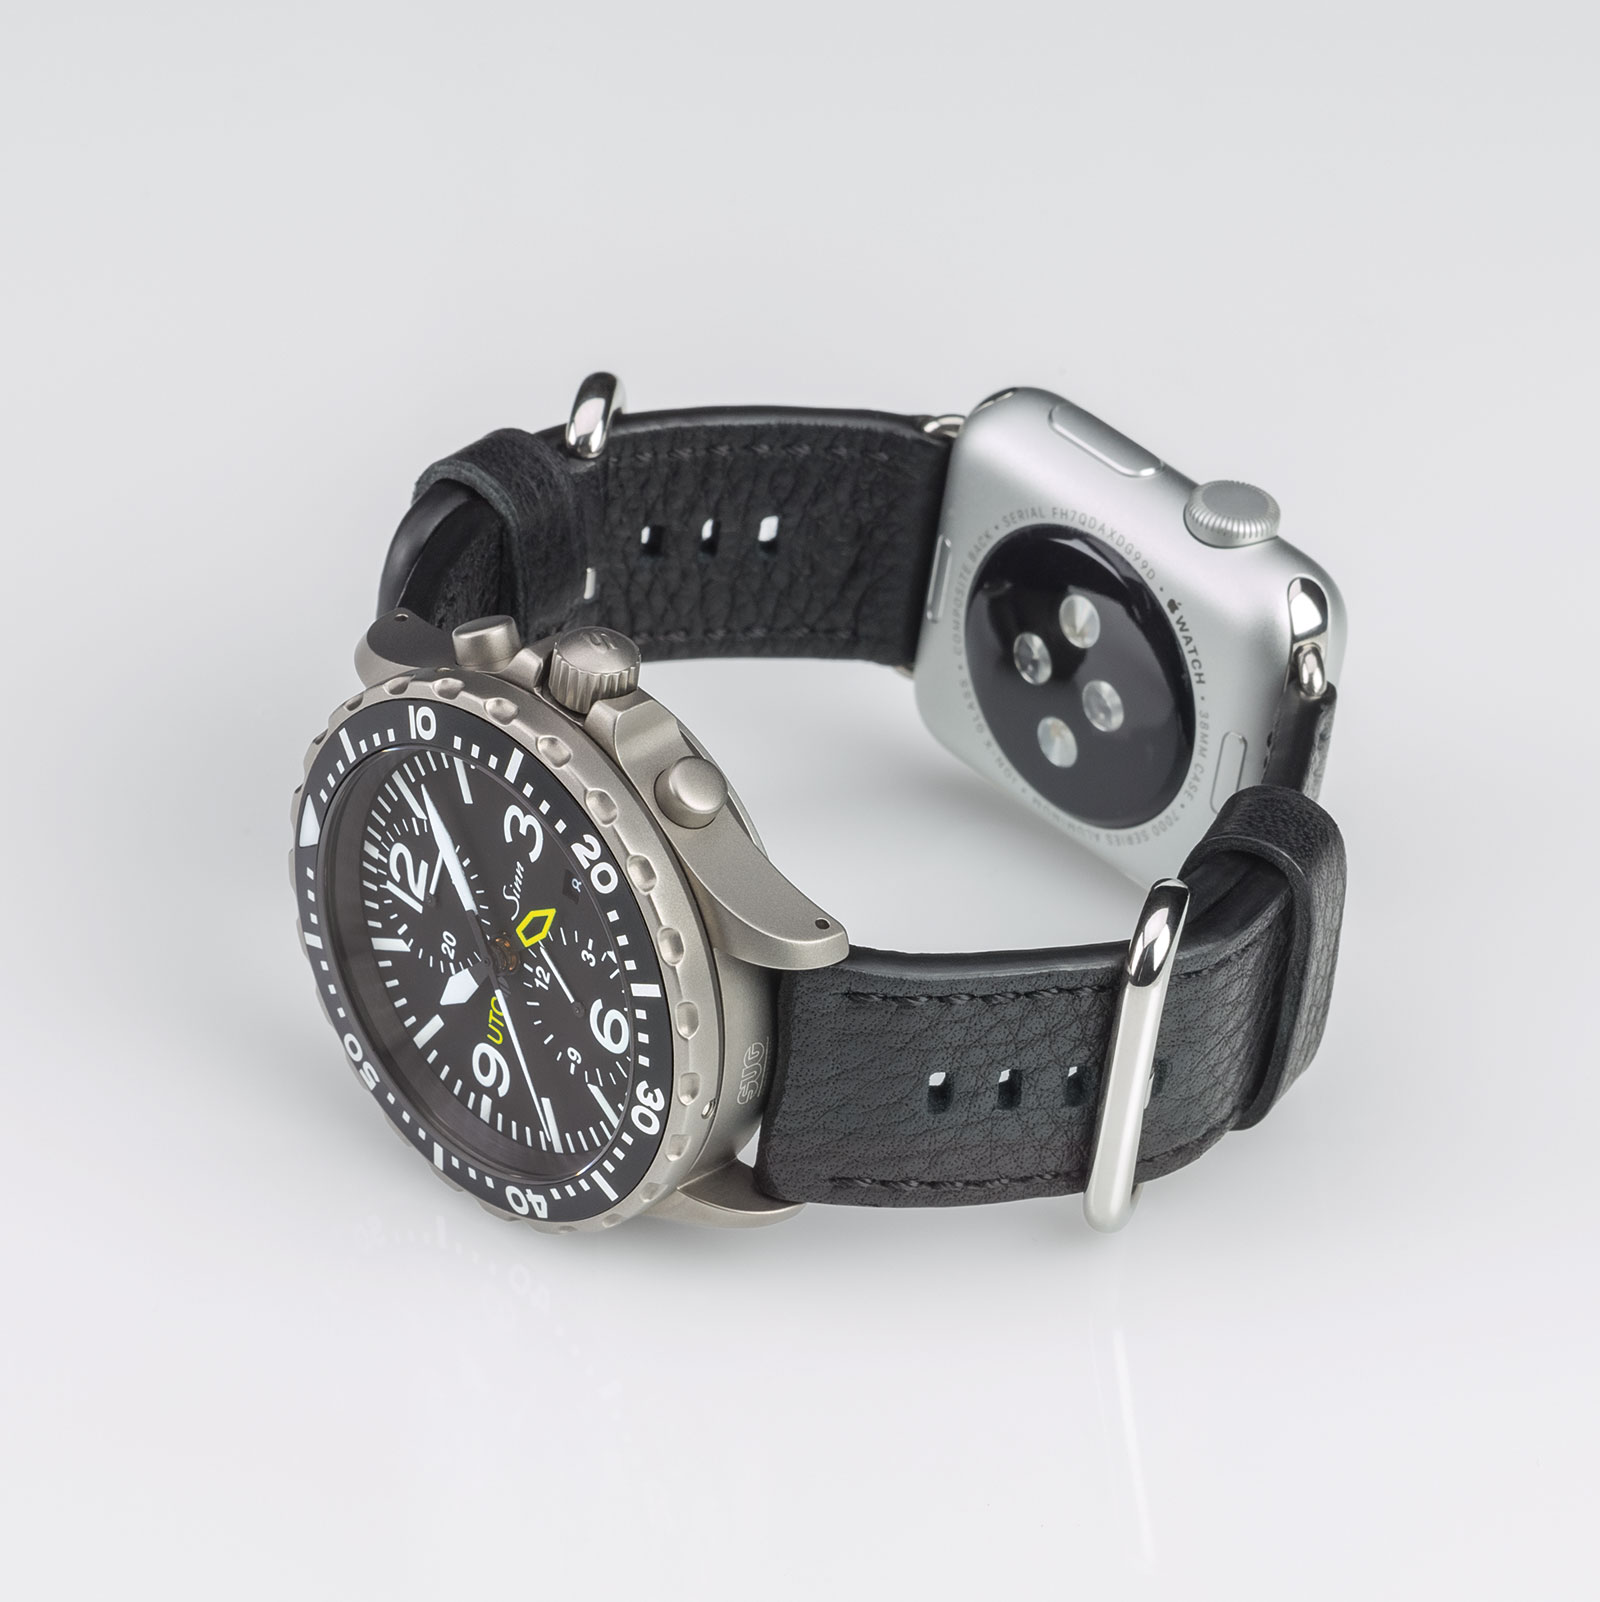 Sinn Dual Strap System Allows Apple Watch & Sinn Watch On The Same